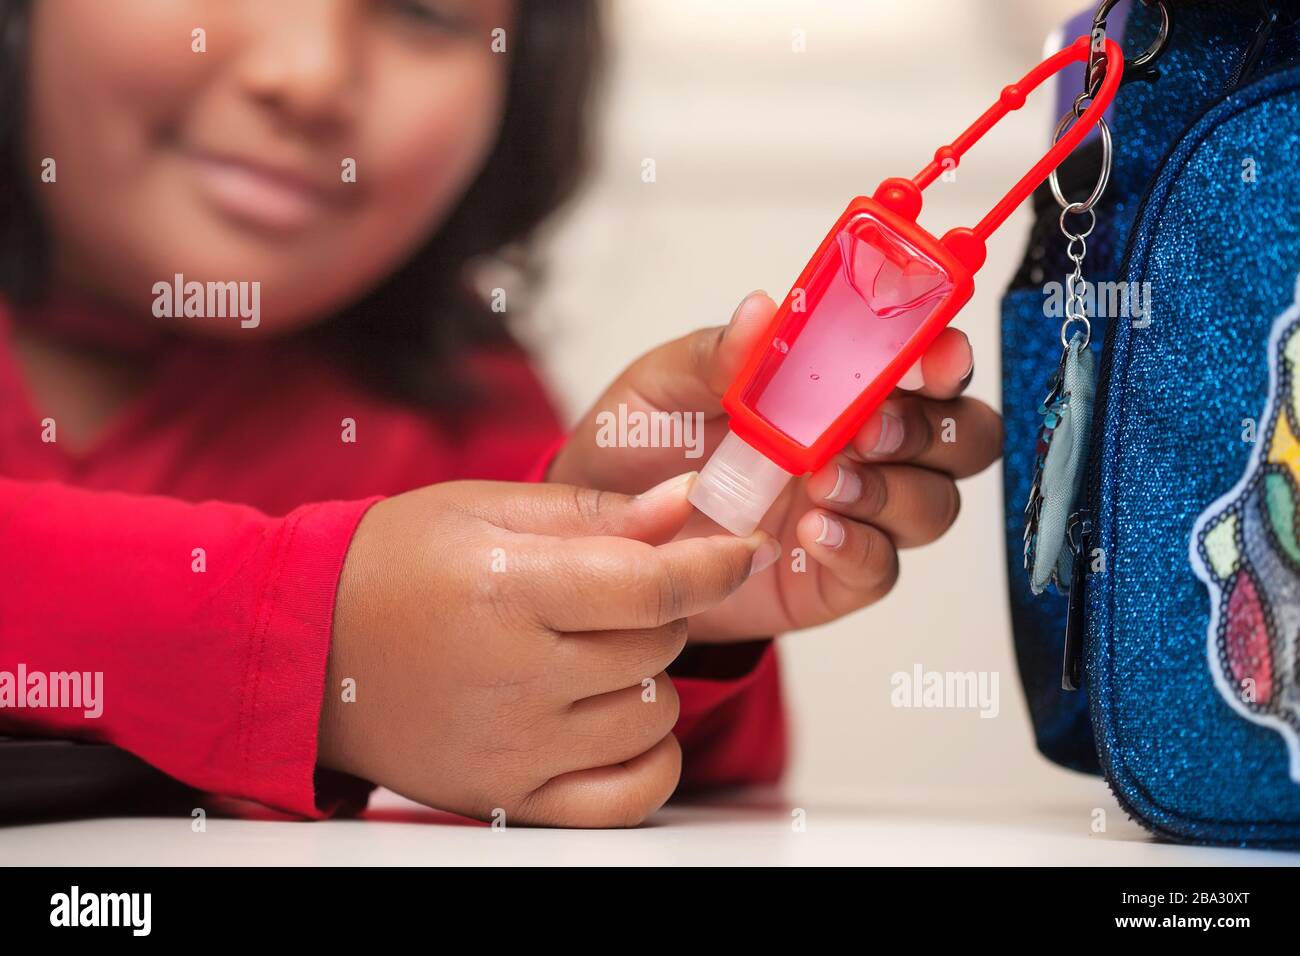 Un estudiante latino que llega a abrir un pequeño desinfectante de manos de gel a base de alcohol que está conectado a su mochila. Foto de stock